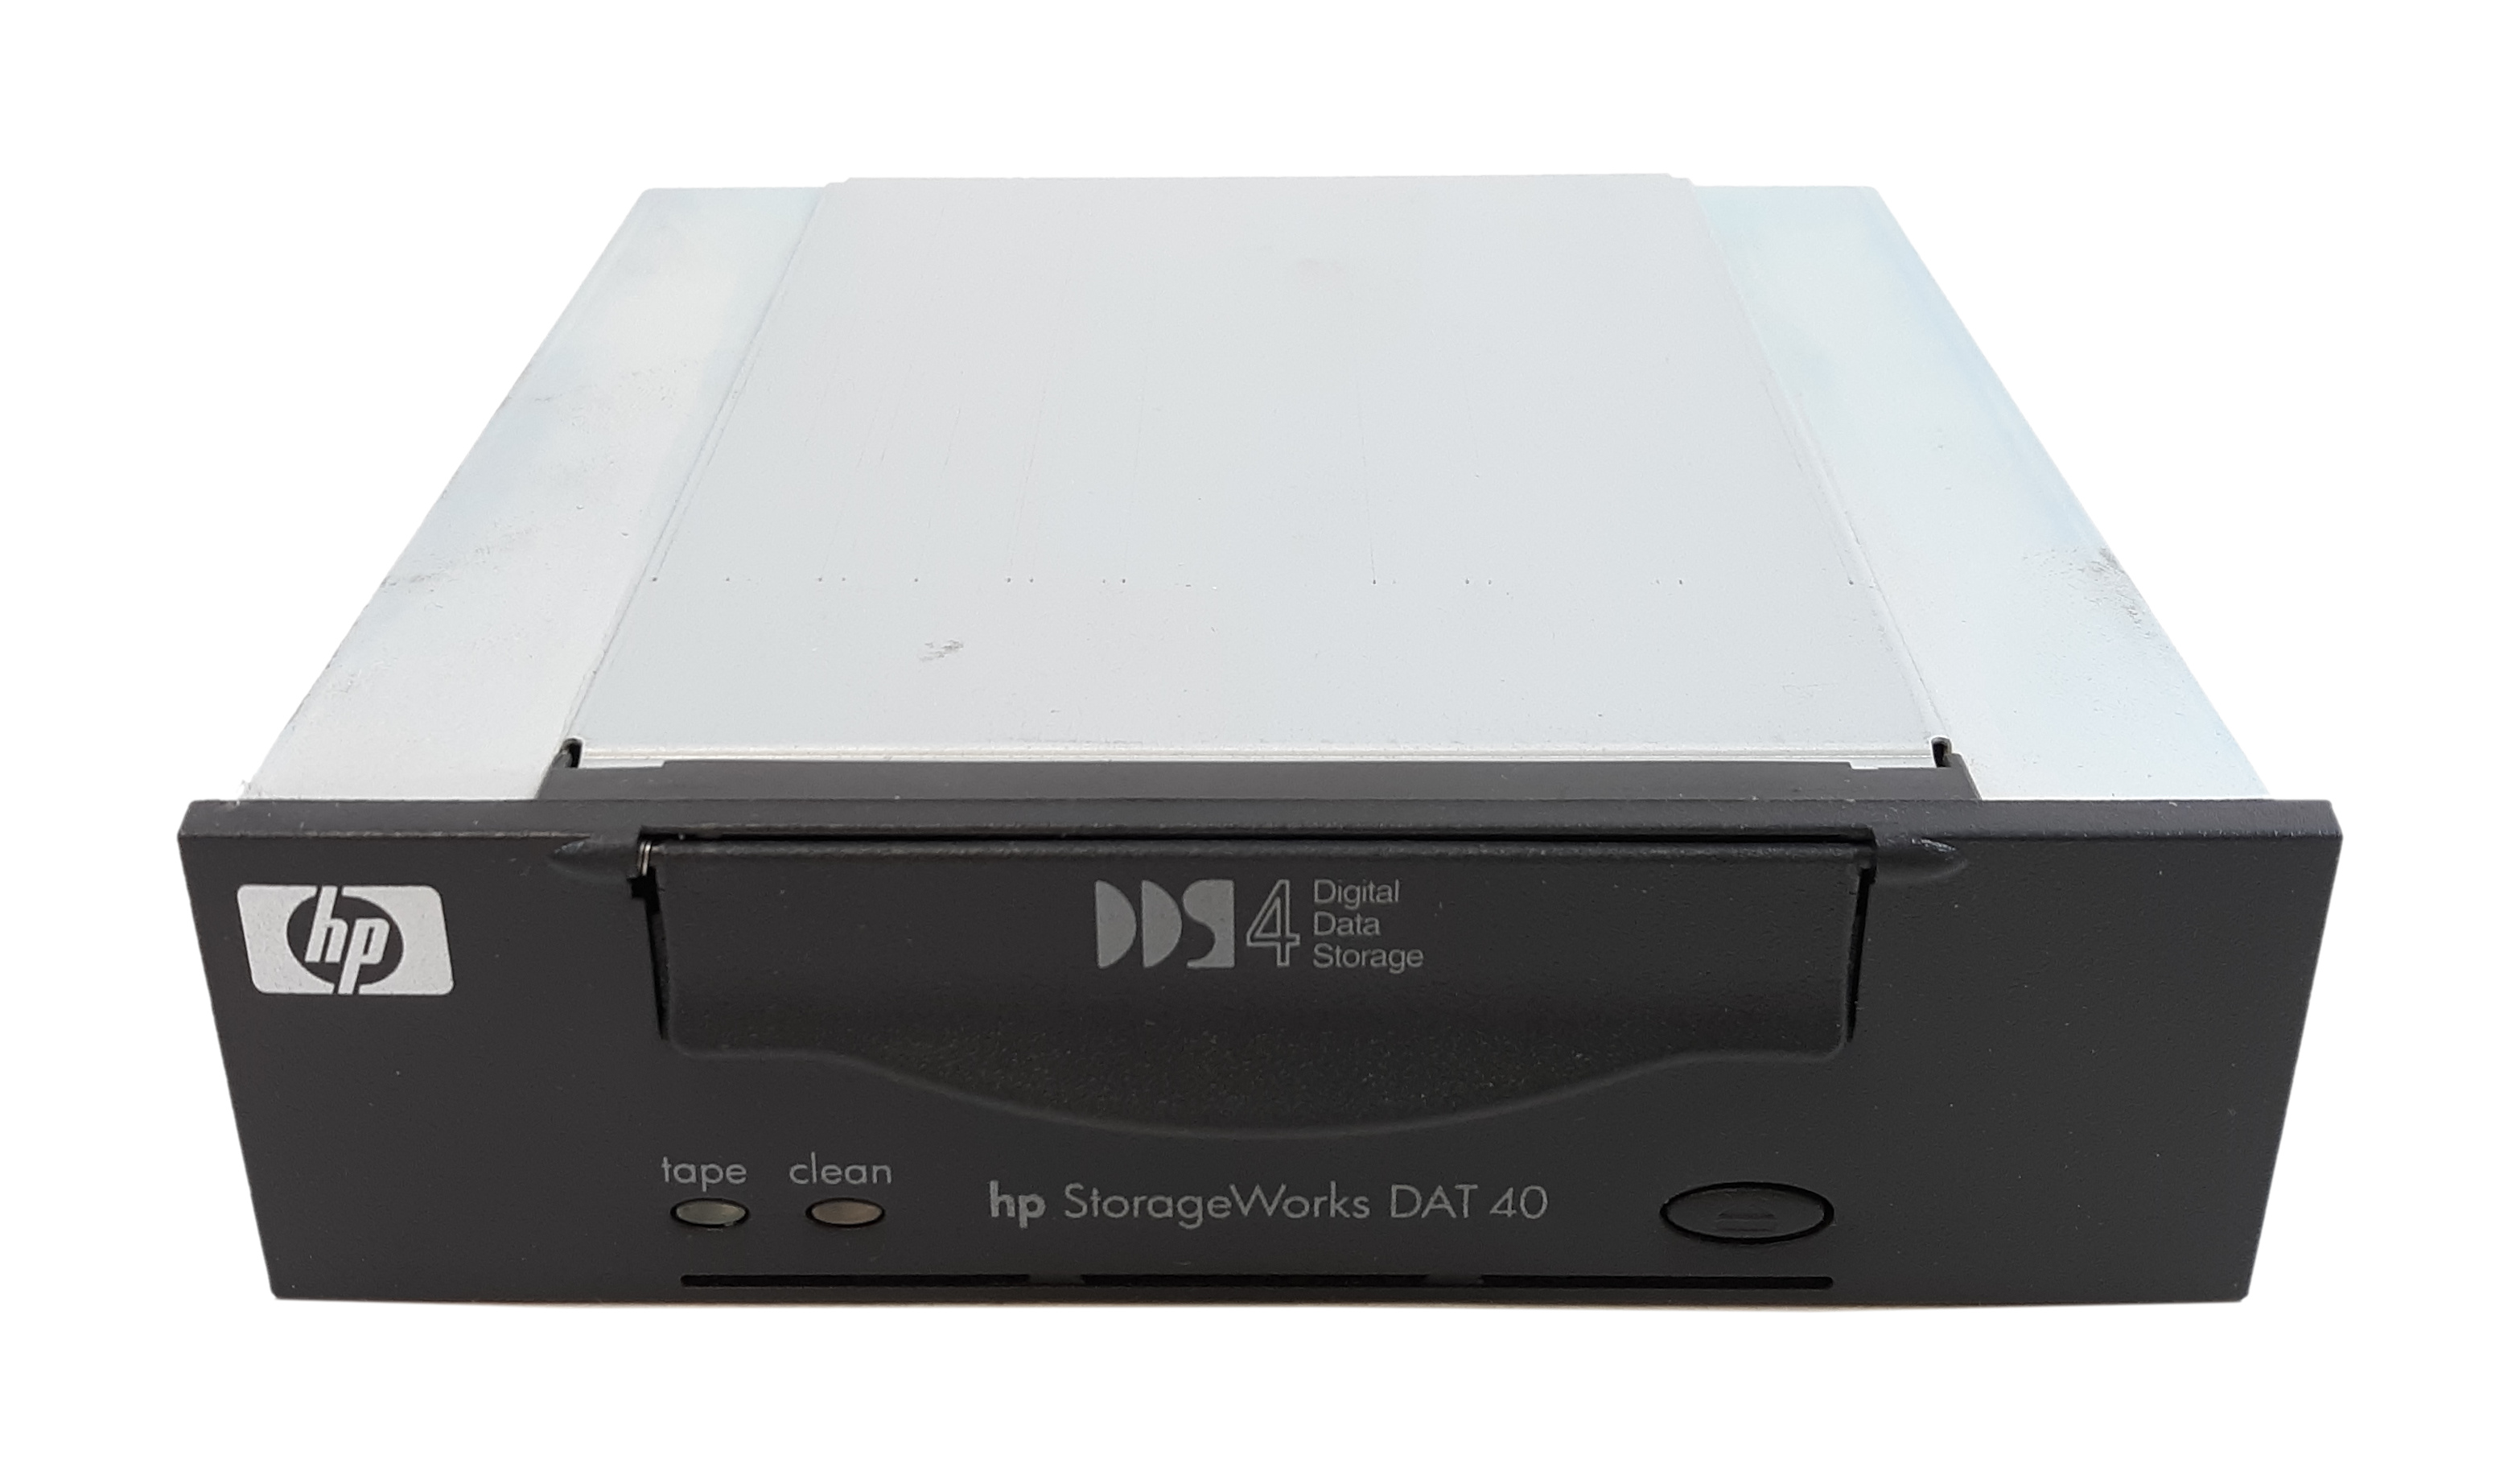 HP DDS 4 StorageWorks DAT 40 C5686B/Q1553A C5868-60004 343801-001 342504-001